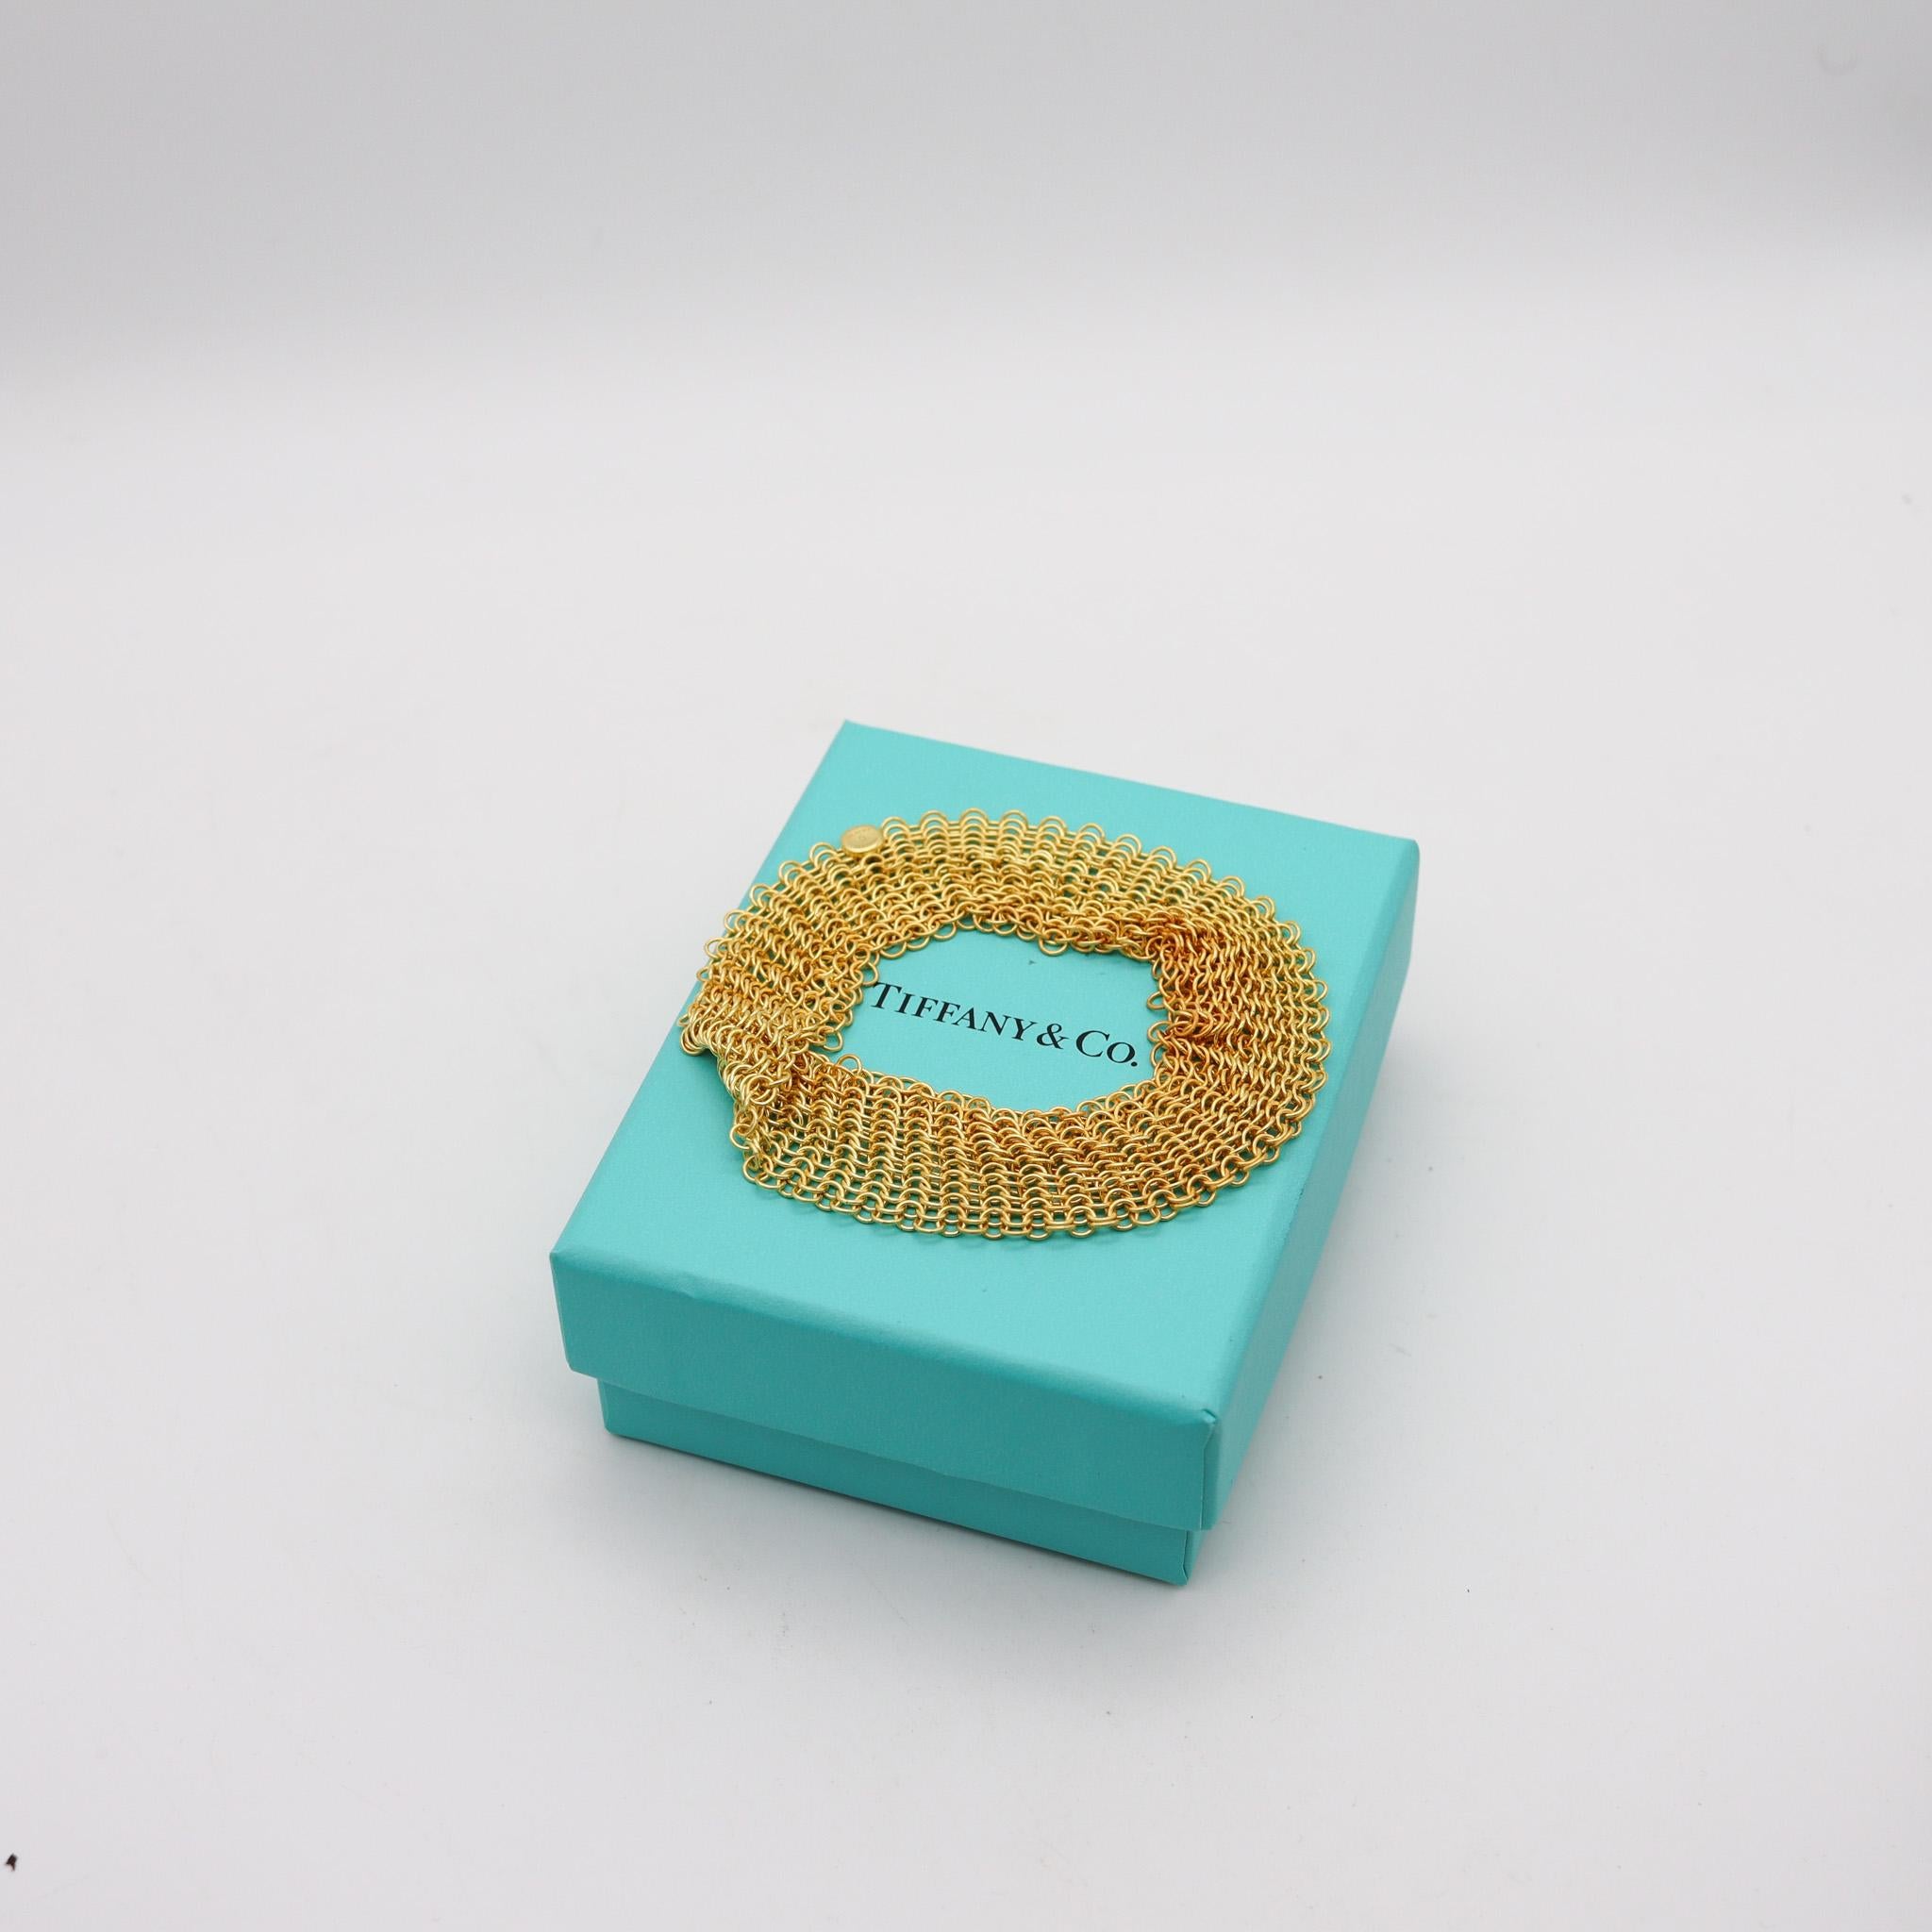 Modernist Tiffany & Co. 1982 Elsa Peretti Mesh Bracelet in 18Kt Gold Vermeil Over Sterling